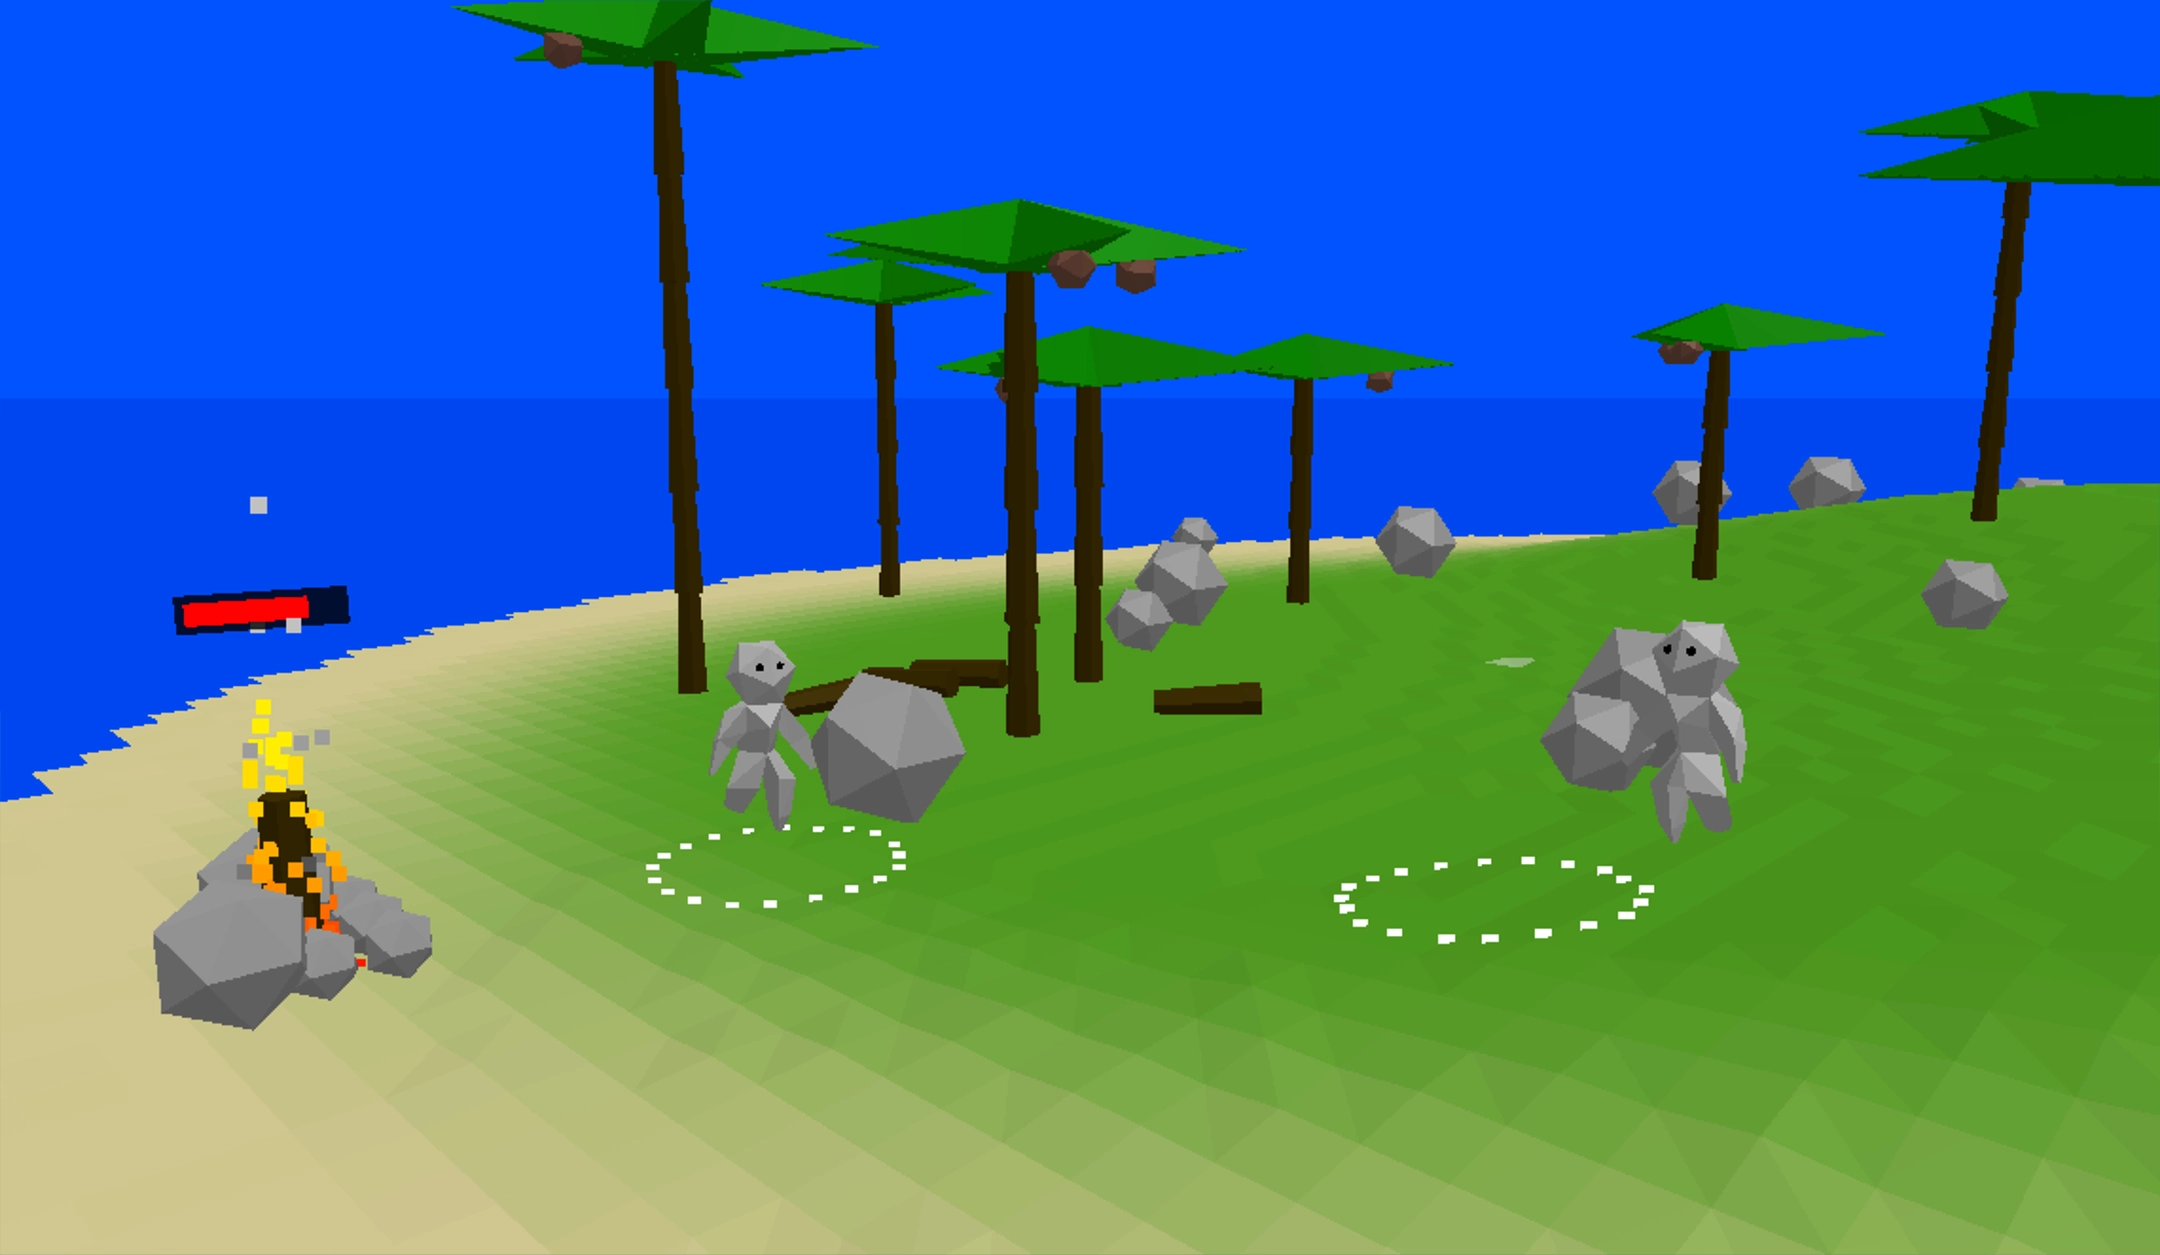 Island Evolution — WebGL Game